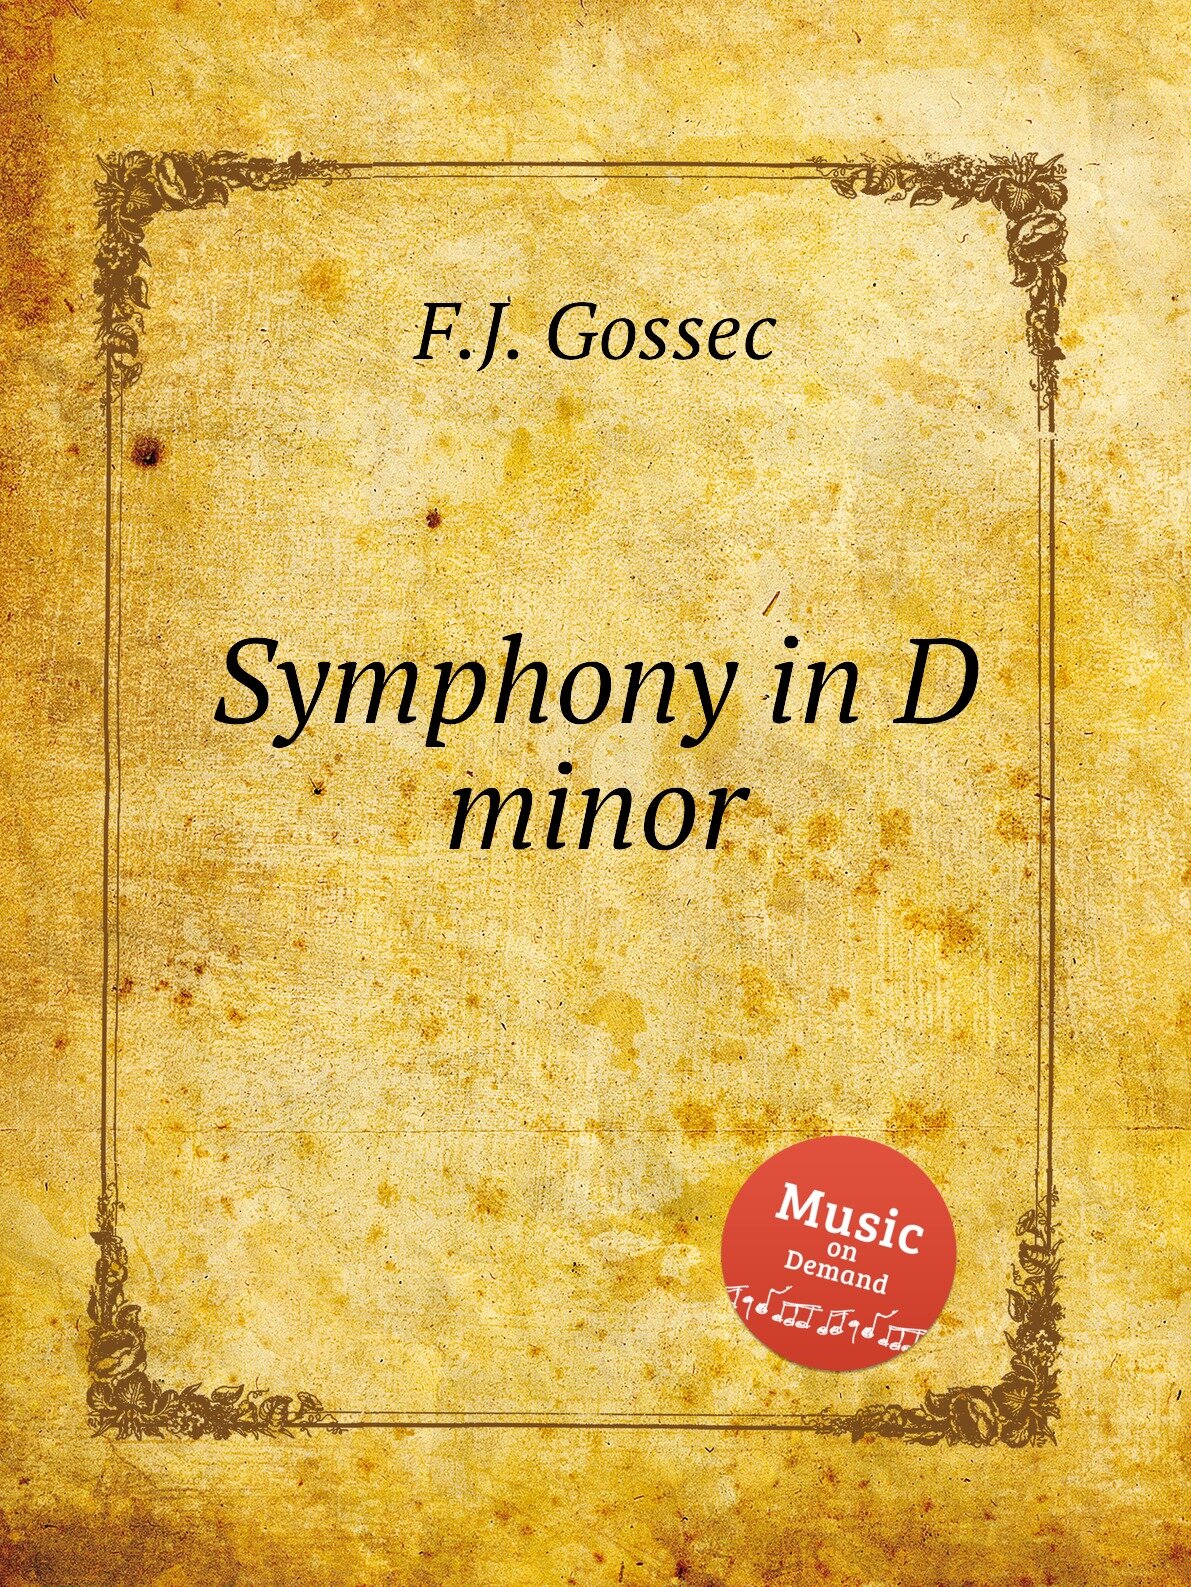 Symphony in D minor